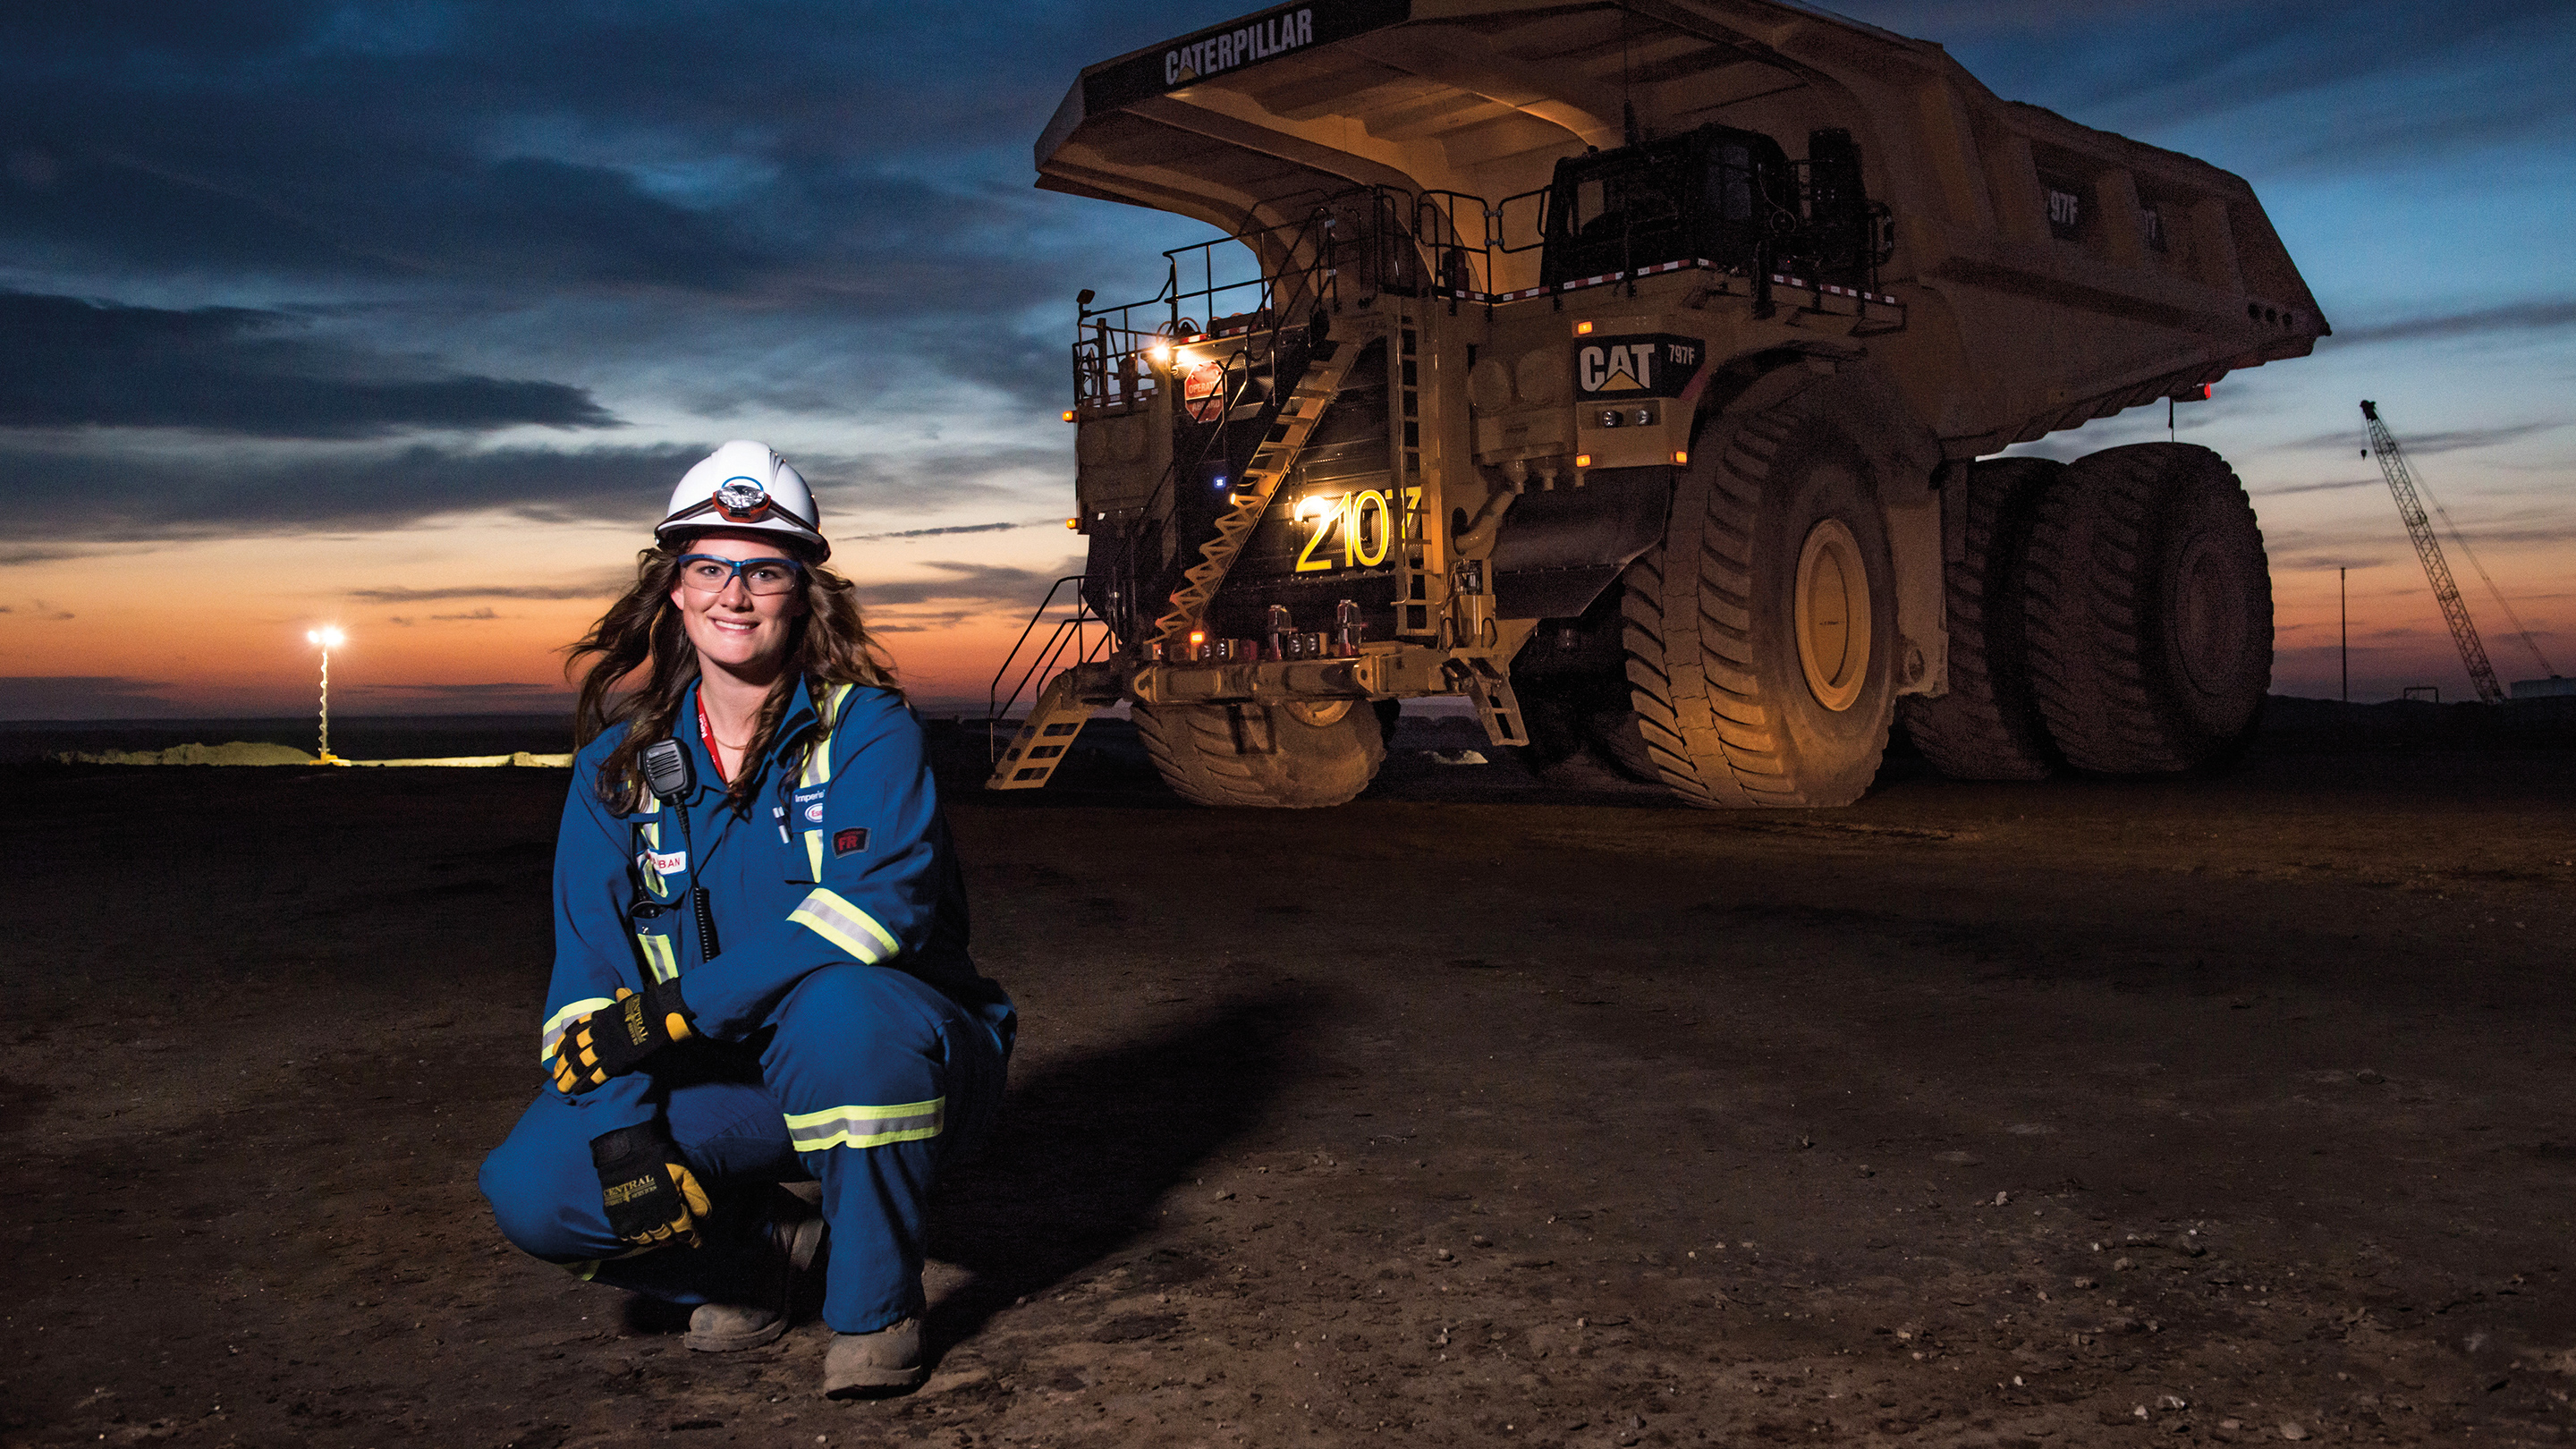 Image Photo — Jamie Alliban, heavy equipment operator at the he Kearl oil sands mining operation in Alberta